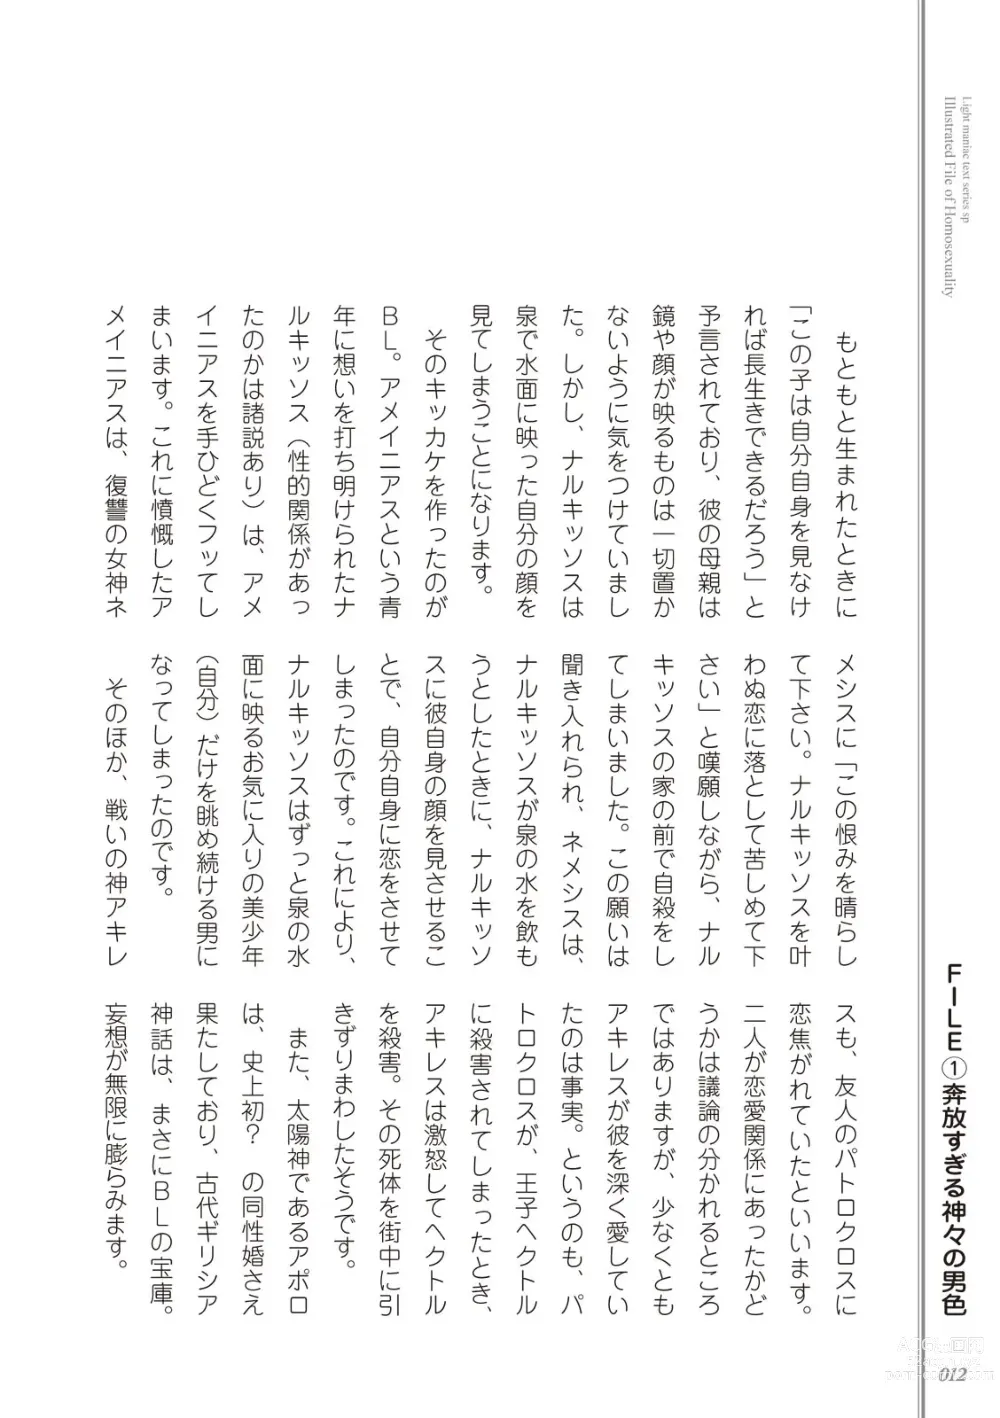 Page 14 of manga Kusa no Rekishi o Atsumete Mairimashita.  Oosame Kudasai - Light maniac text series sp Illustrated File of Homosexuality